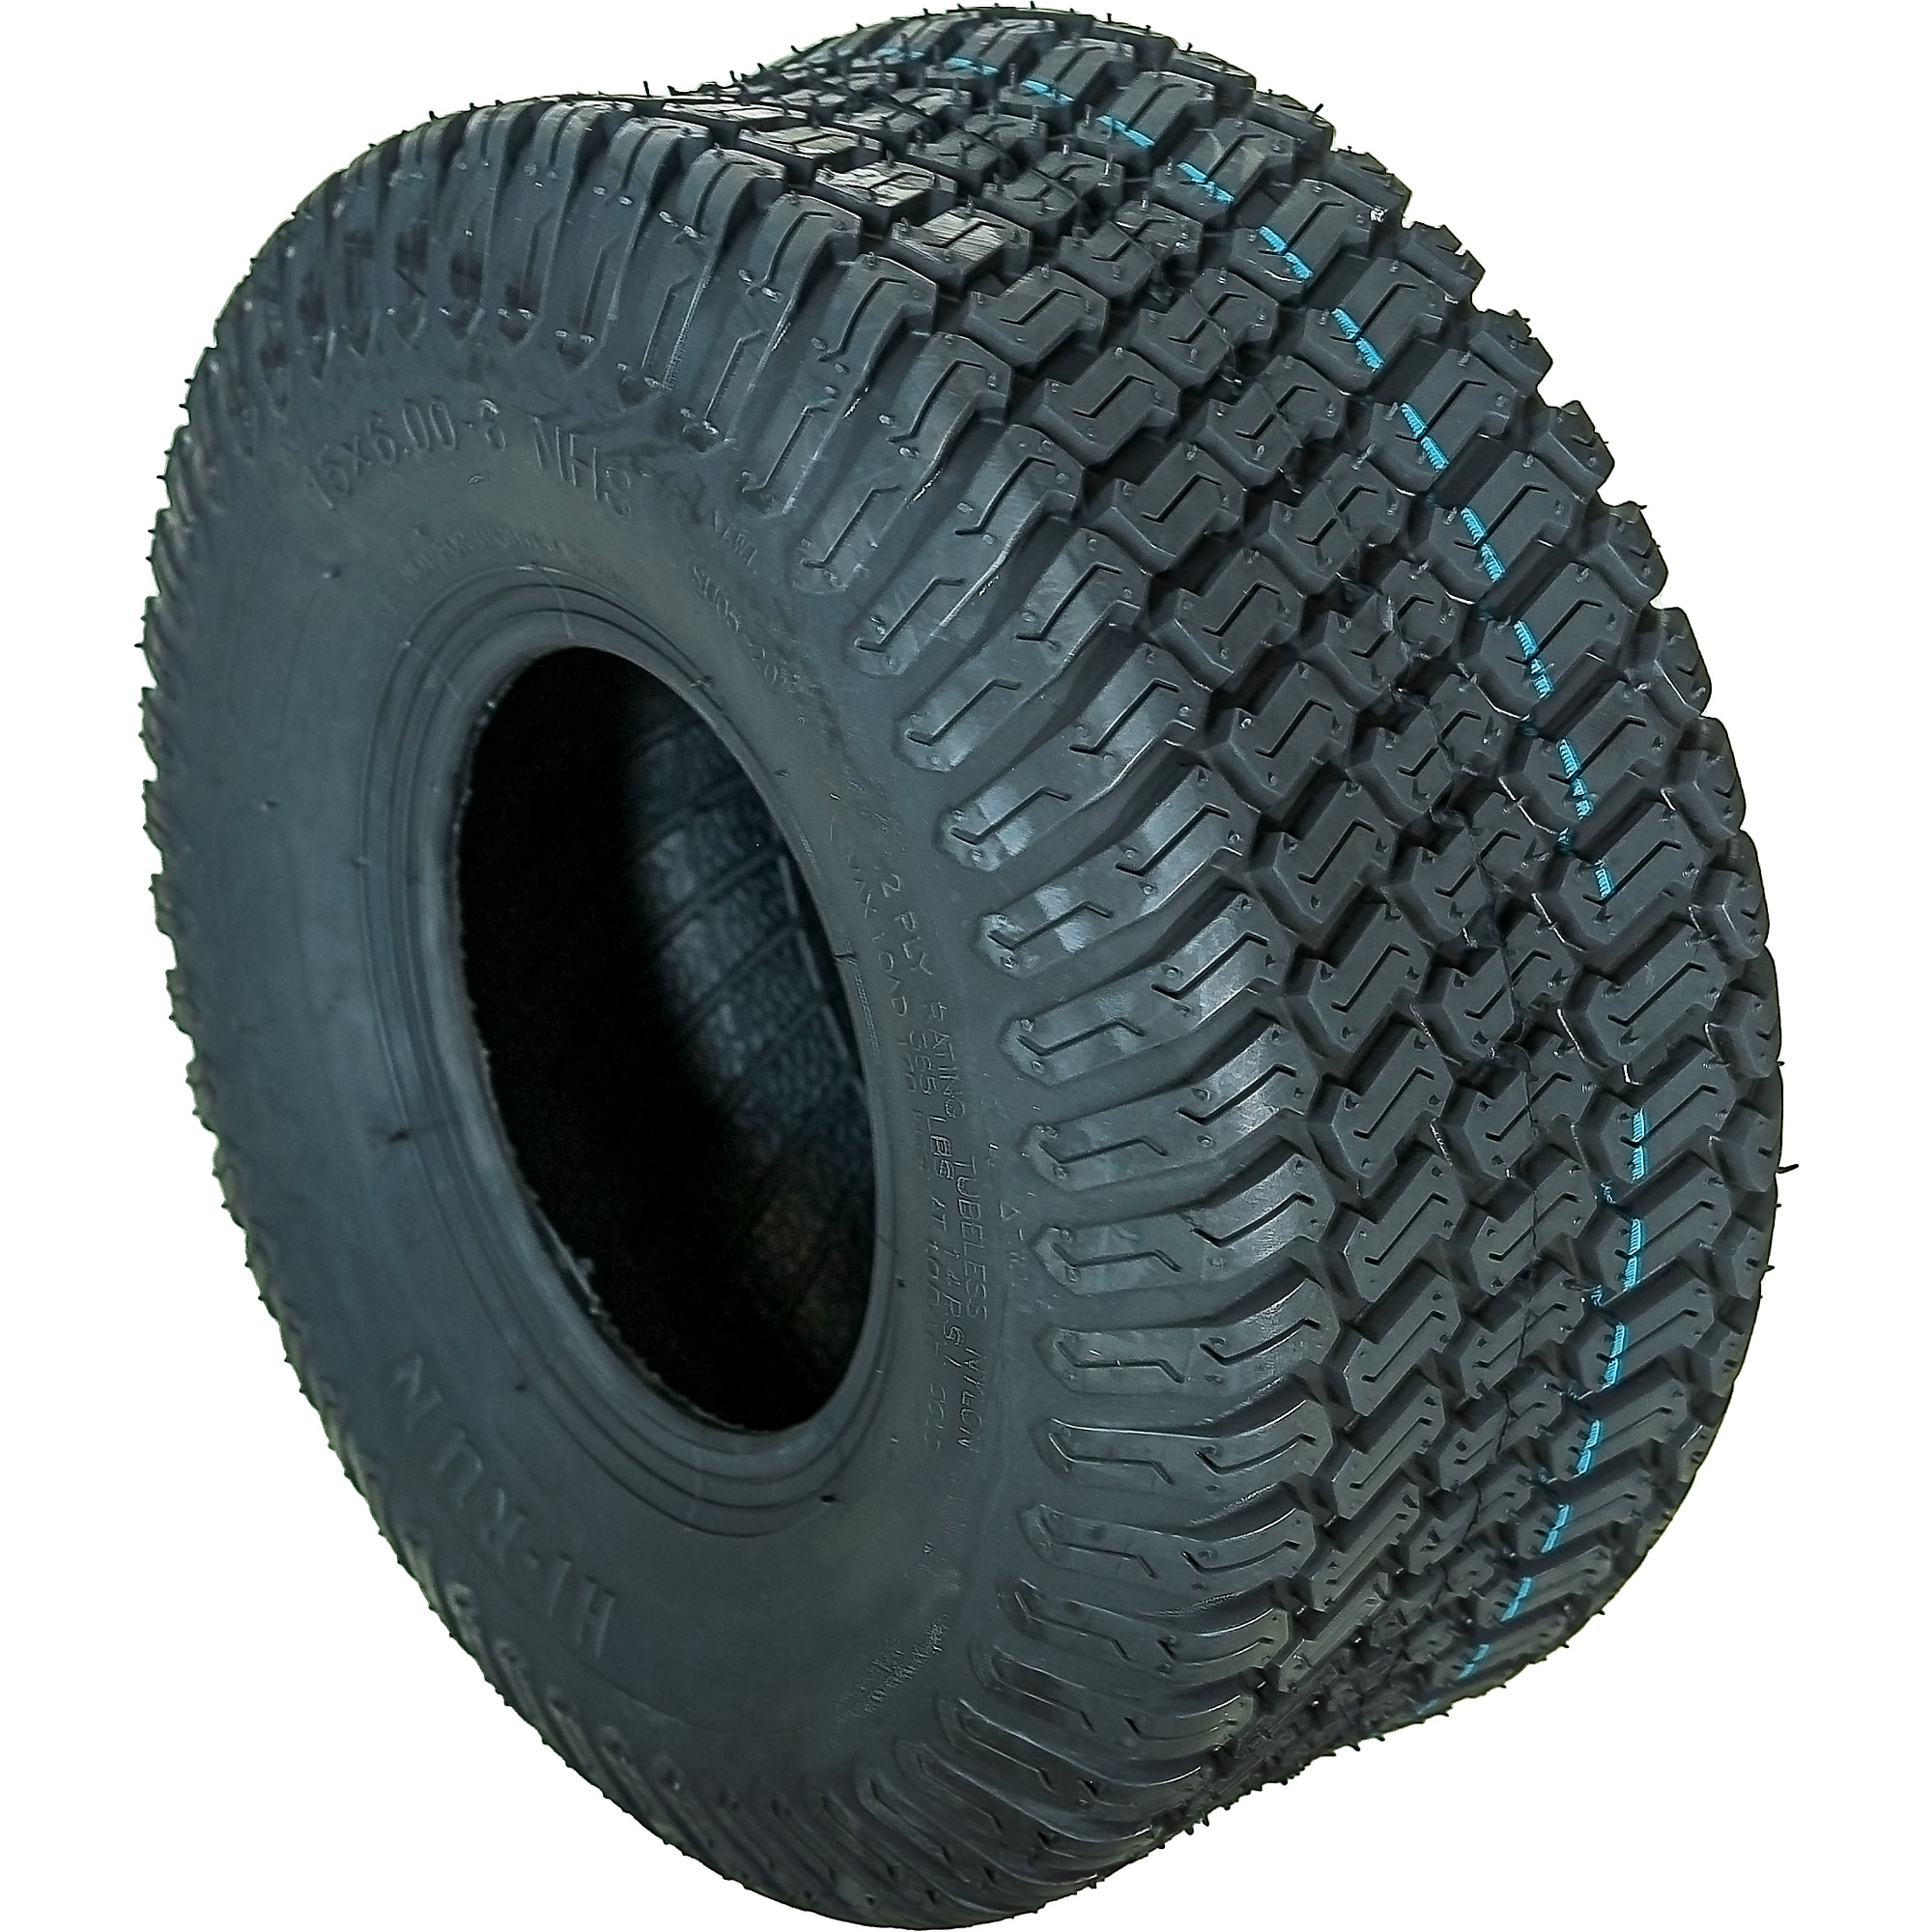 HI-RUN, Lawn Garden Tire, SU05 Turf, Tire Size 15X6.00-6 Load Range Rating  A, Model# WD1030